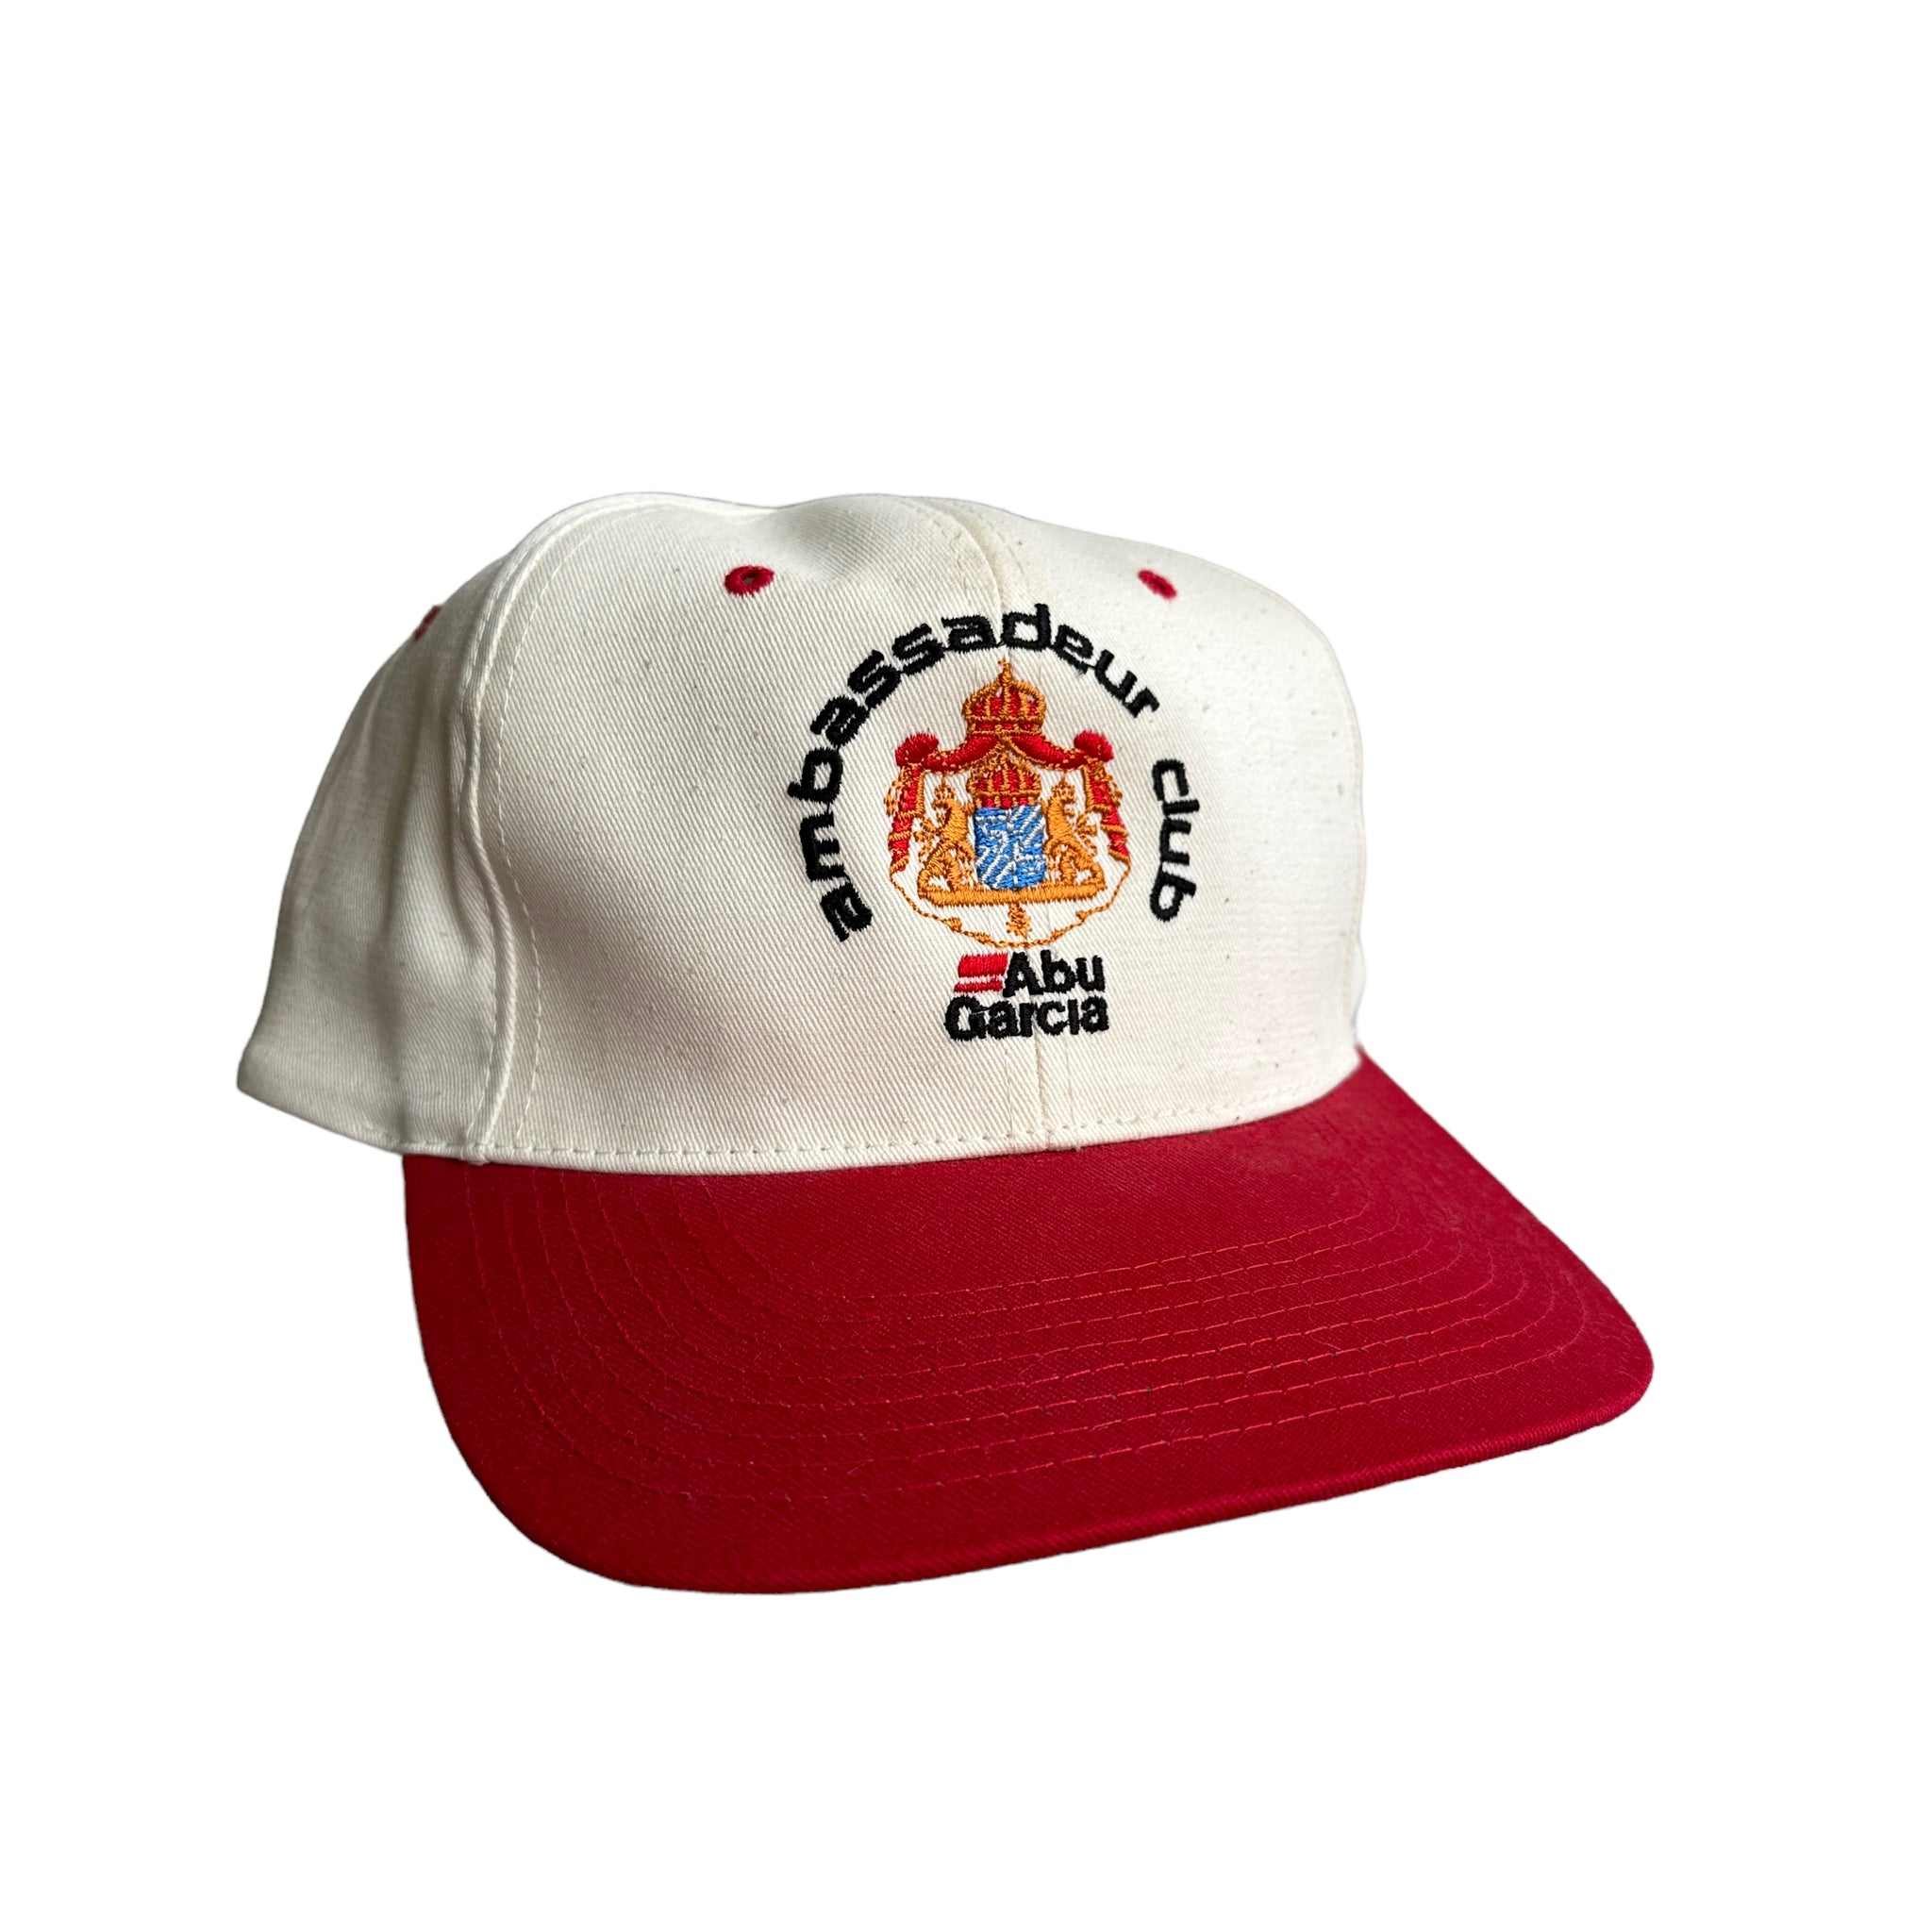 Garcia fishing hat – Vintage Sponsor